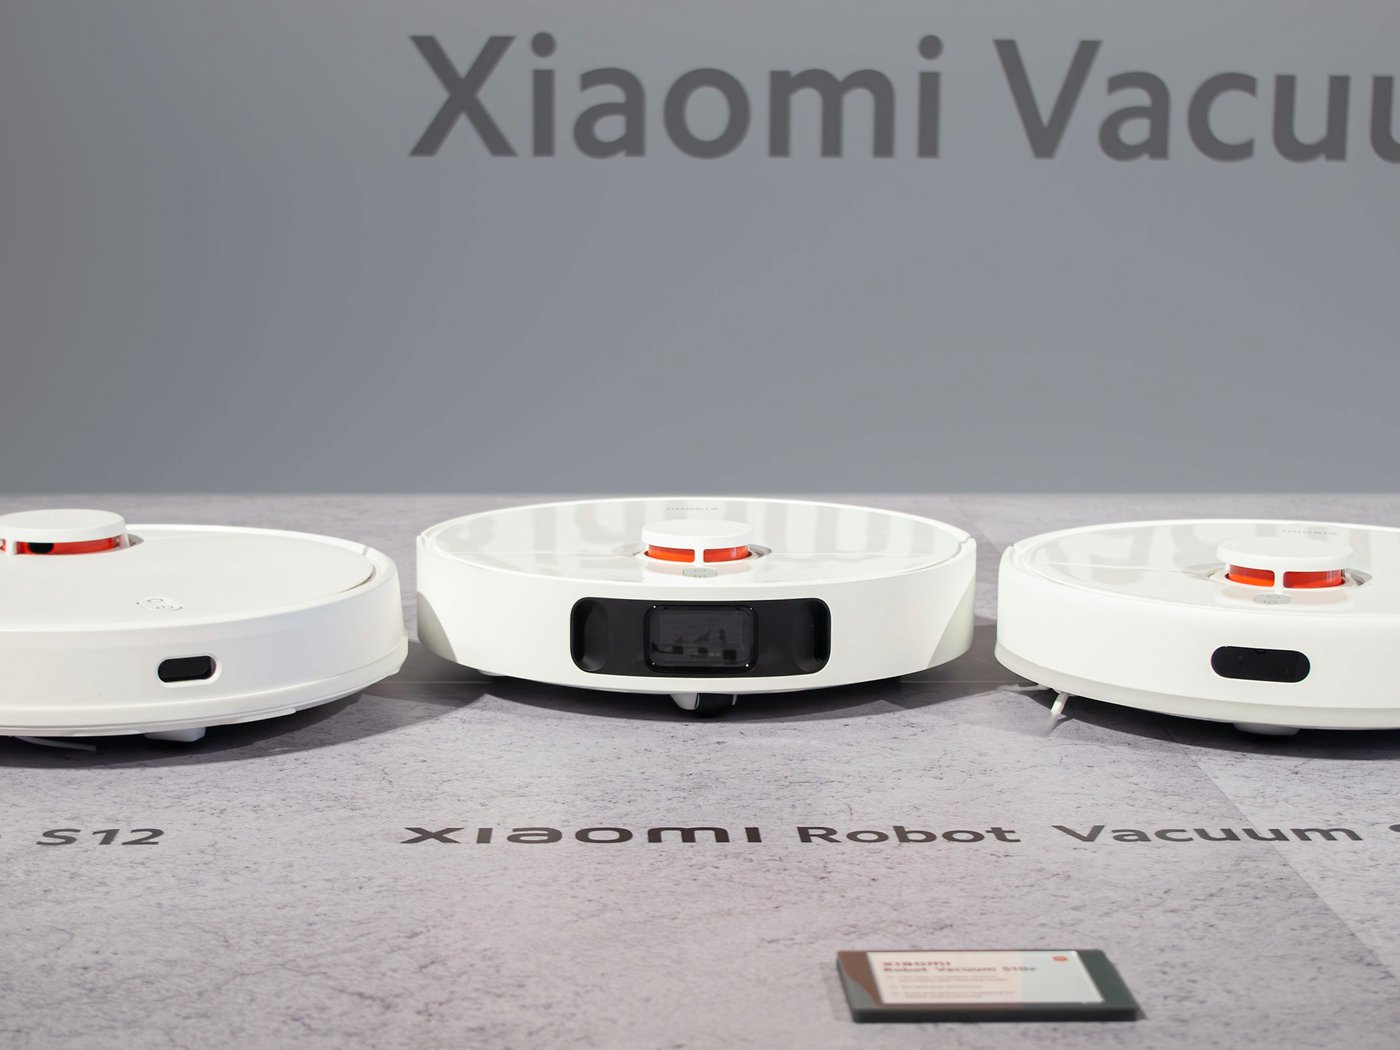 Xiaomi Robot Vacuum S12: Análisis & Opinión